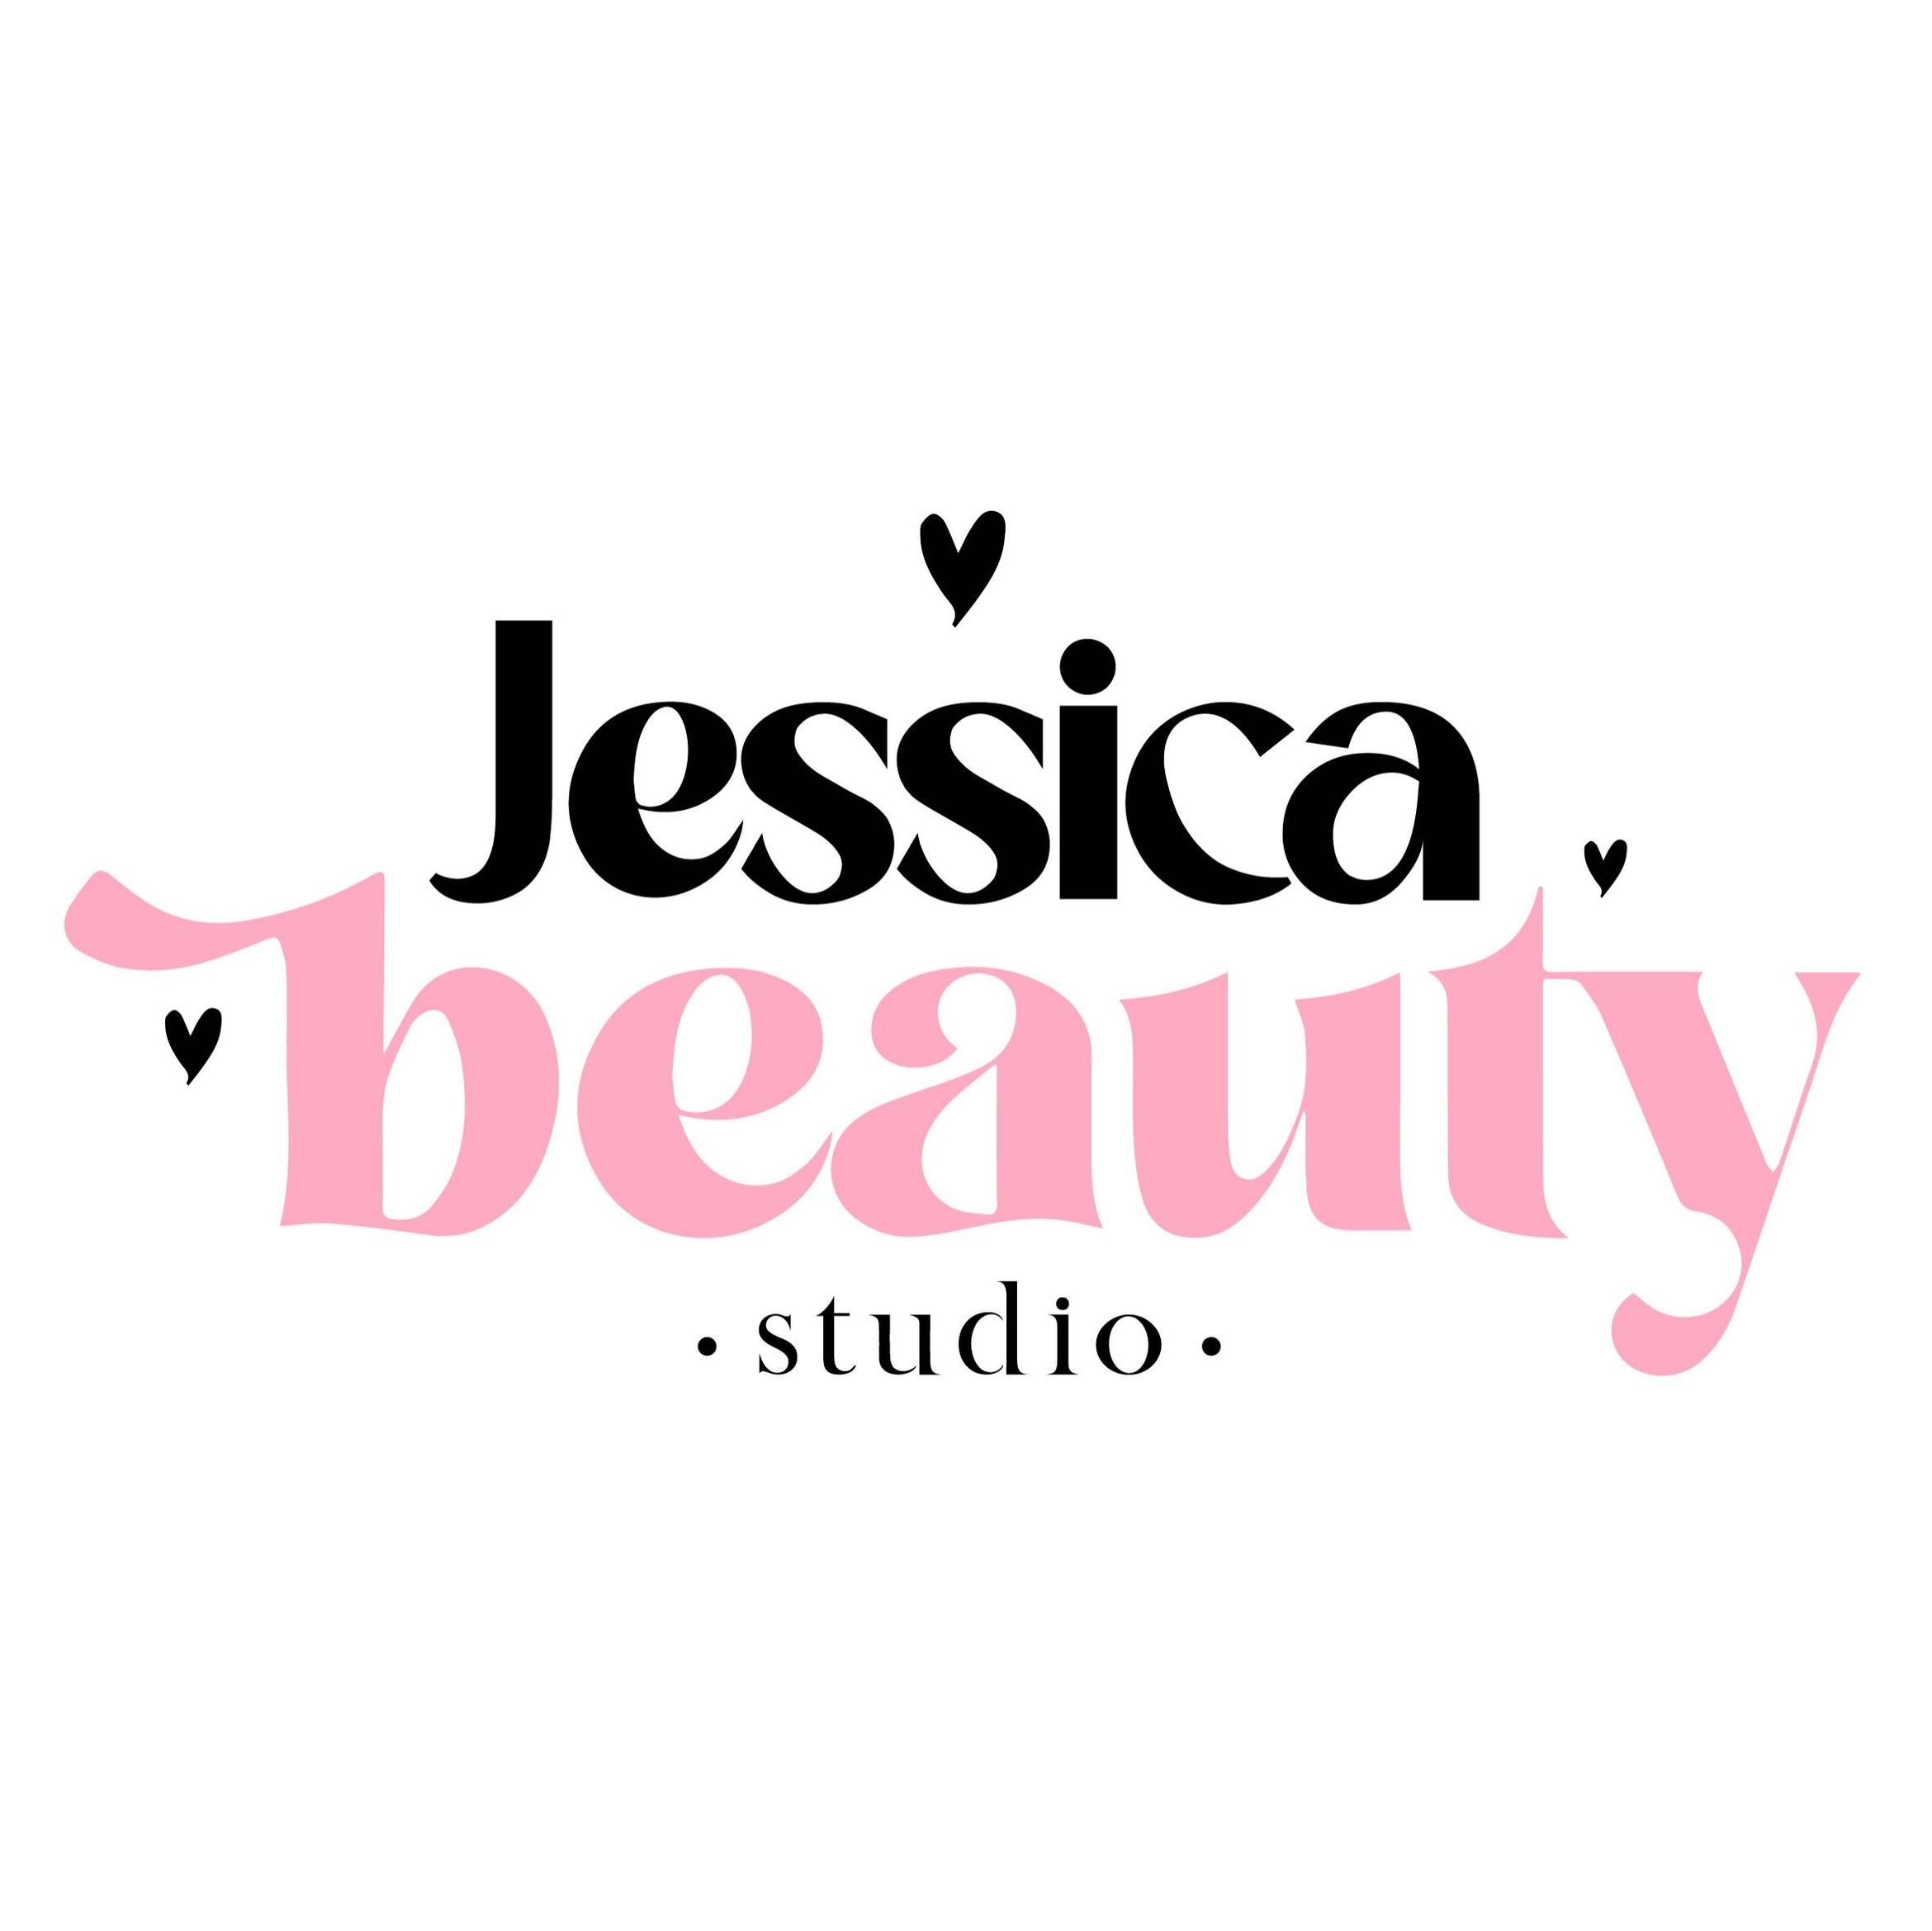 Jessica Beauty Studio, Escritor Aguayo Godoy, Plaza Belén, 14014, Córdoba